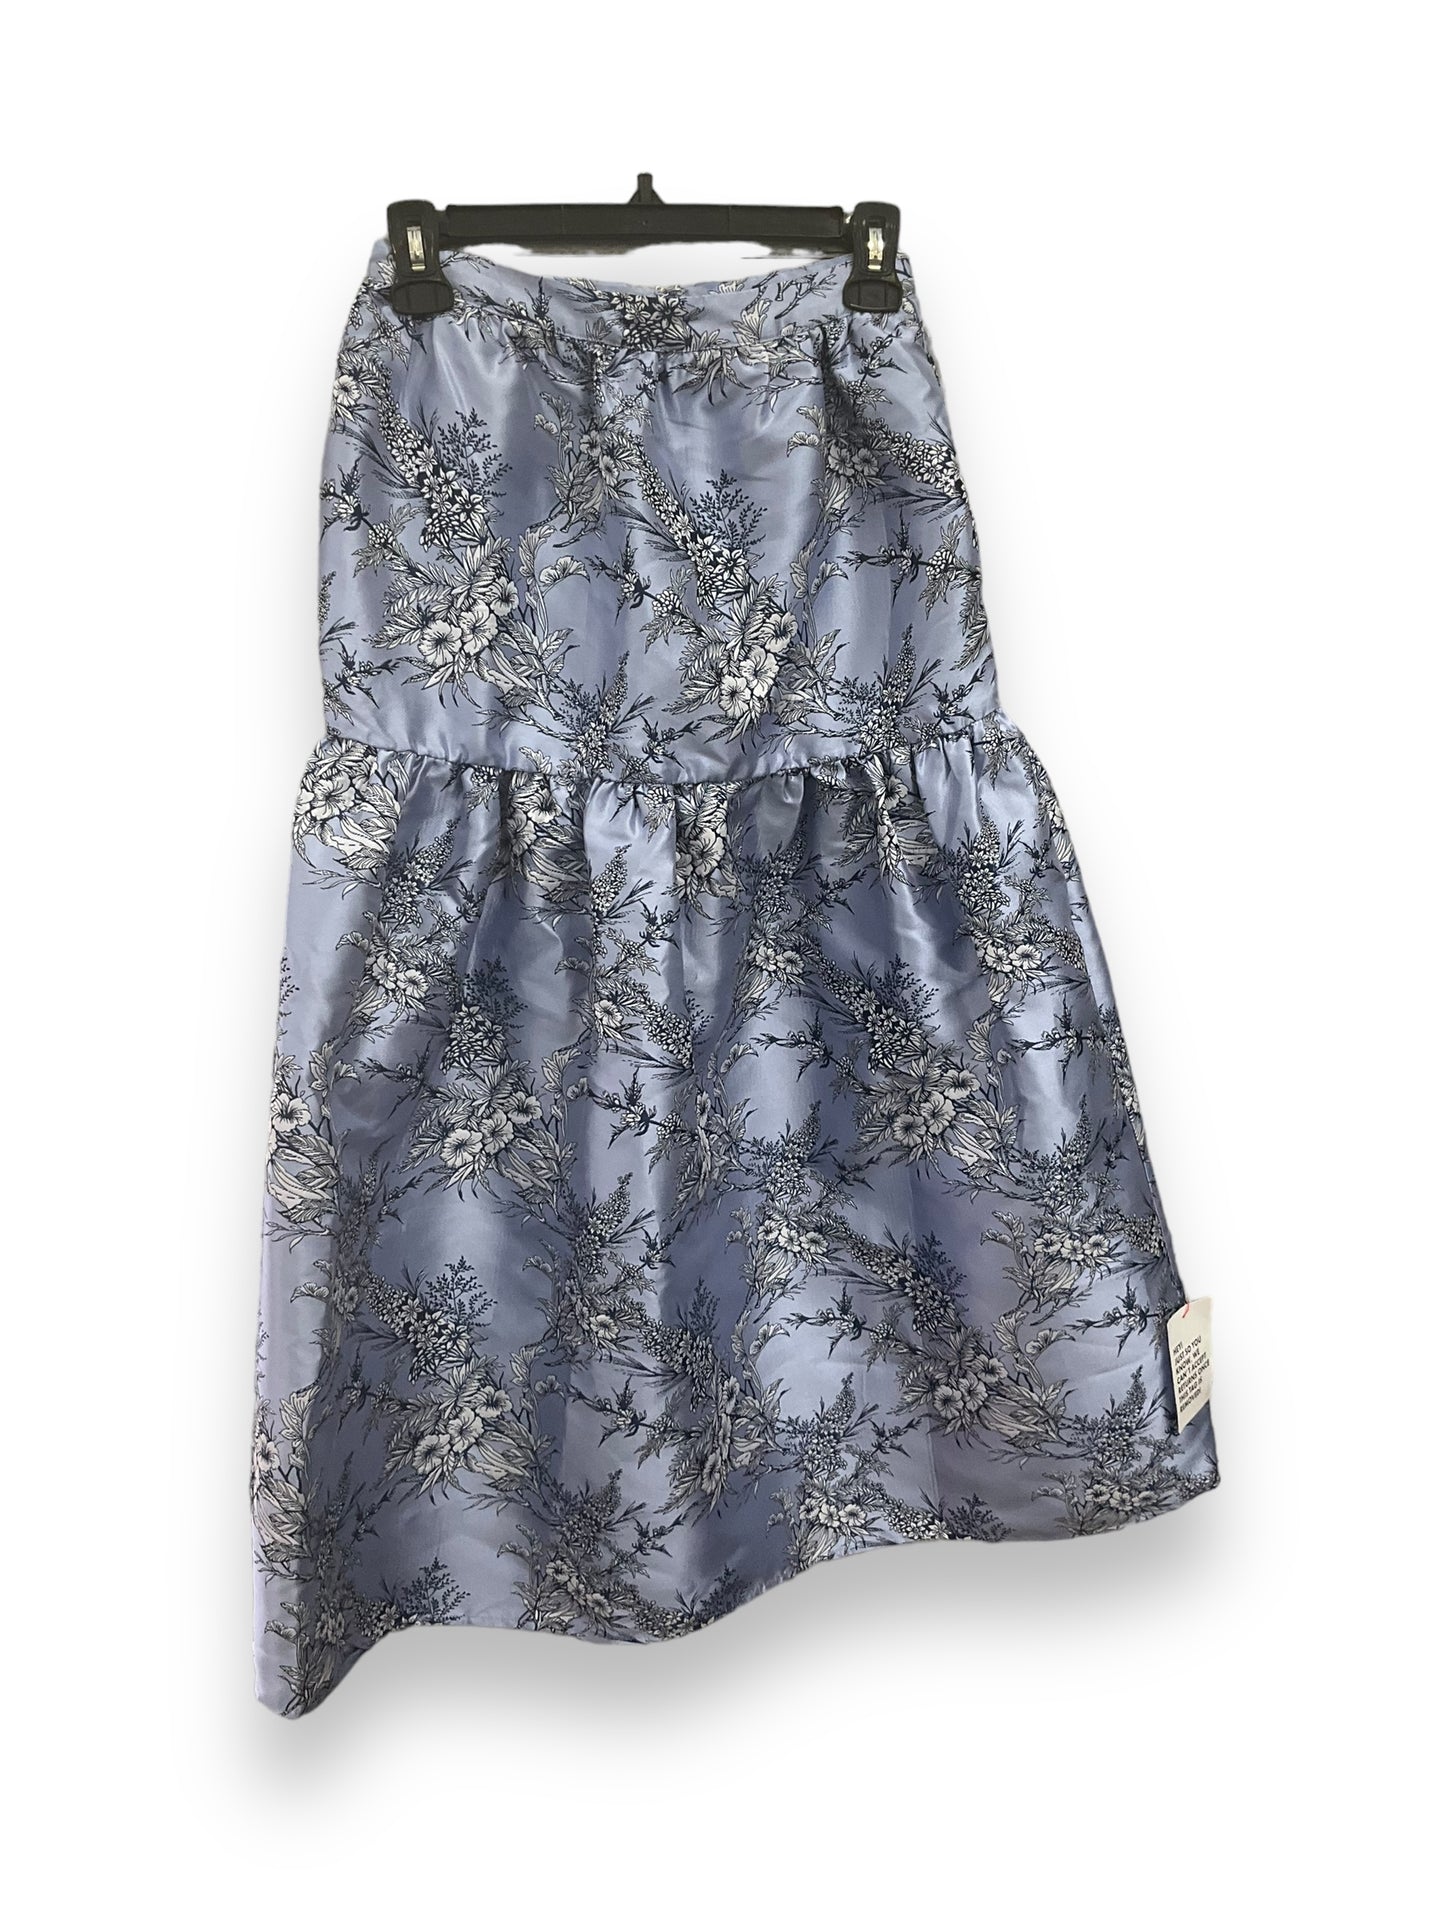 Skirt Midi By Asos  Size: Xs